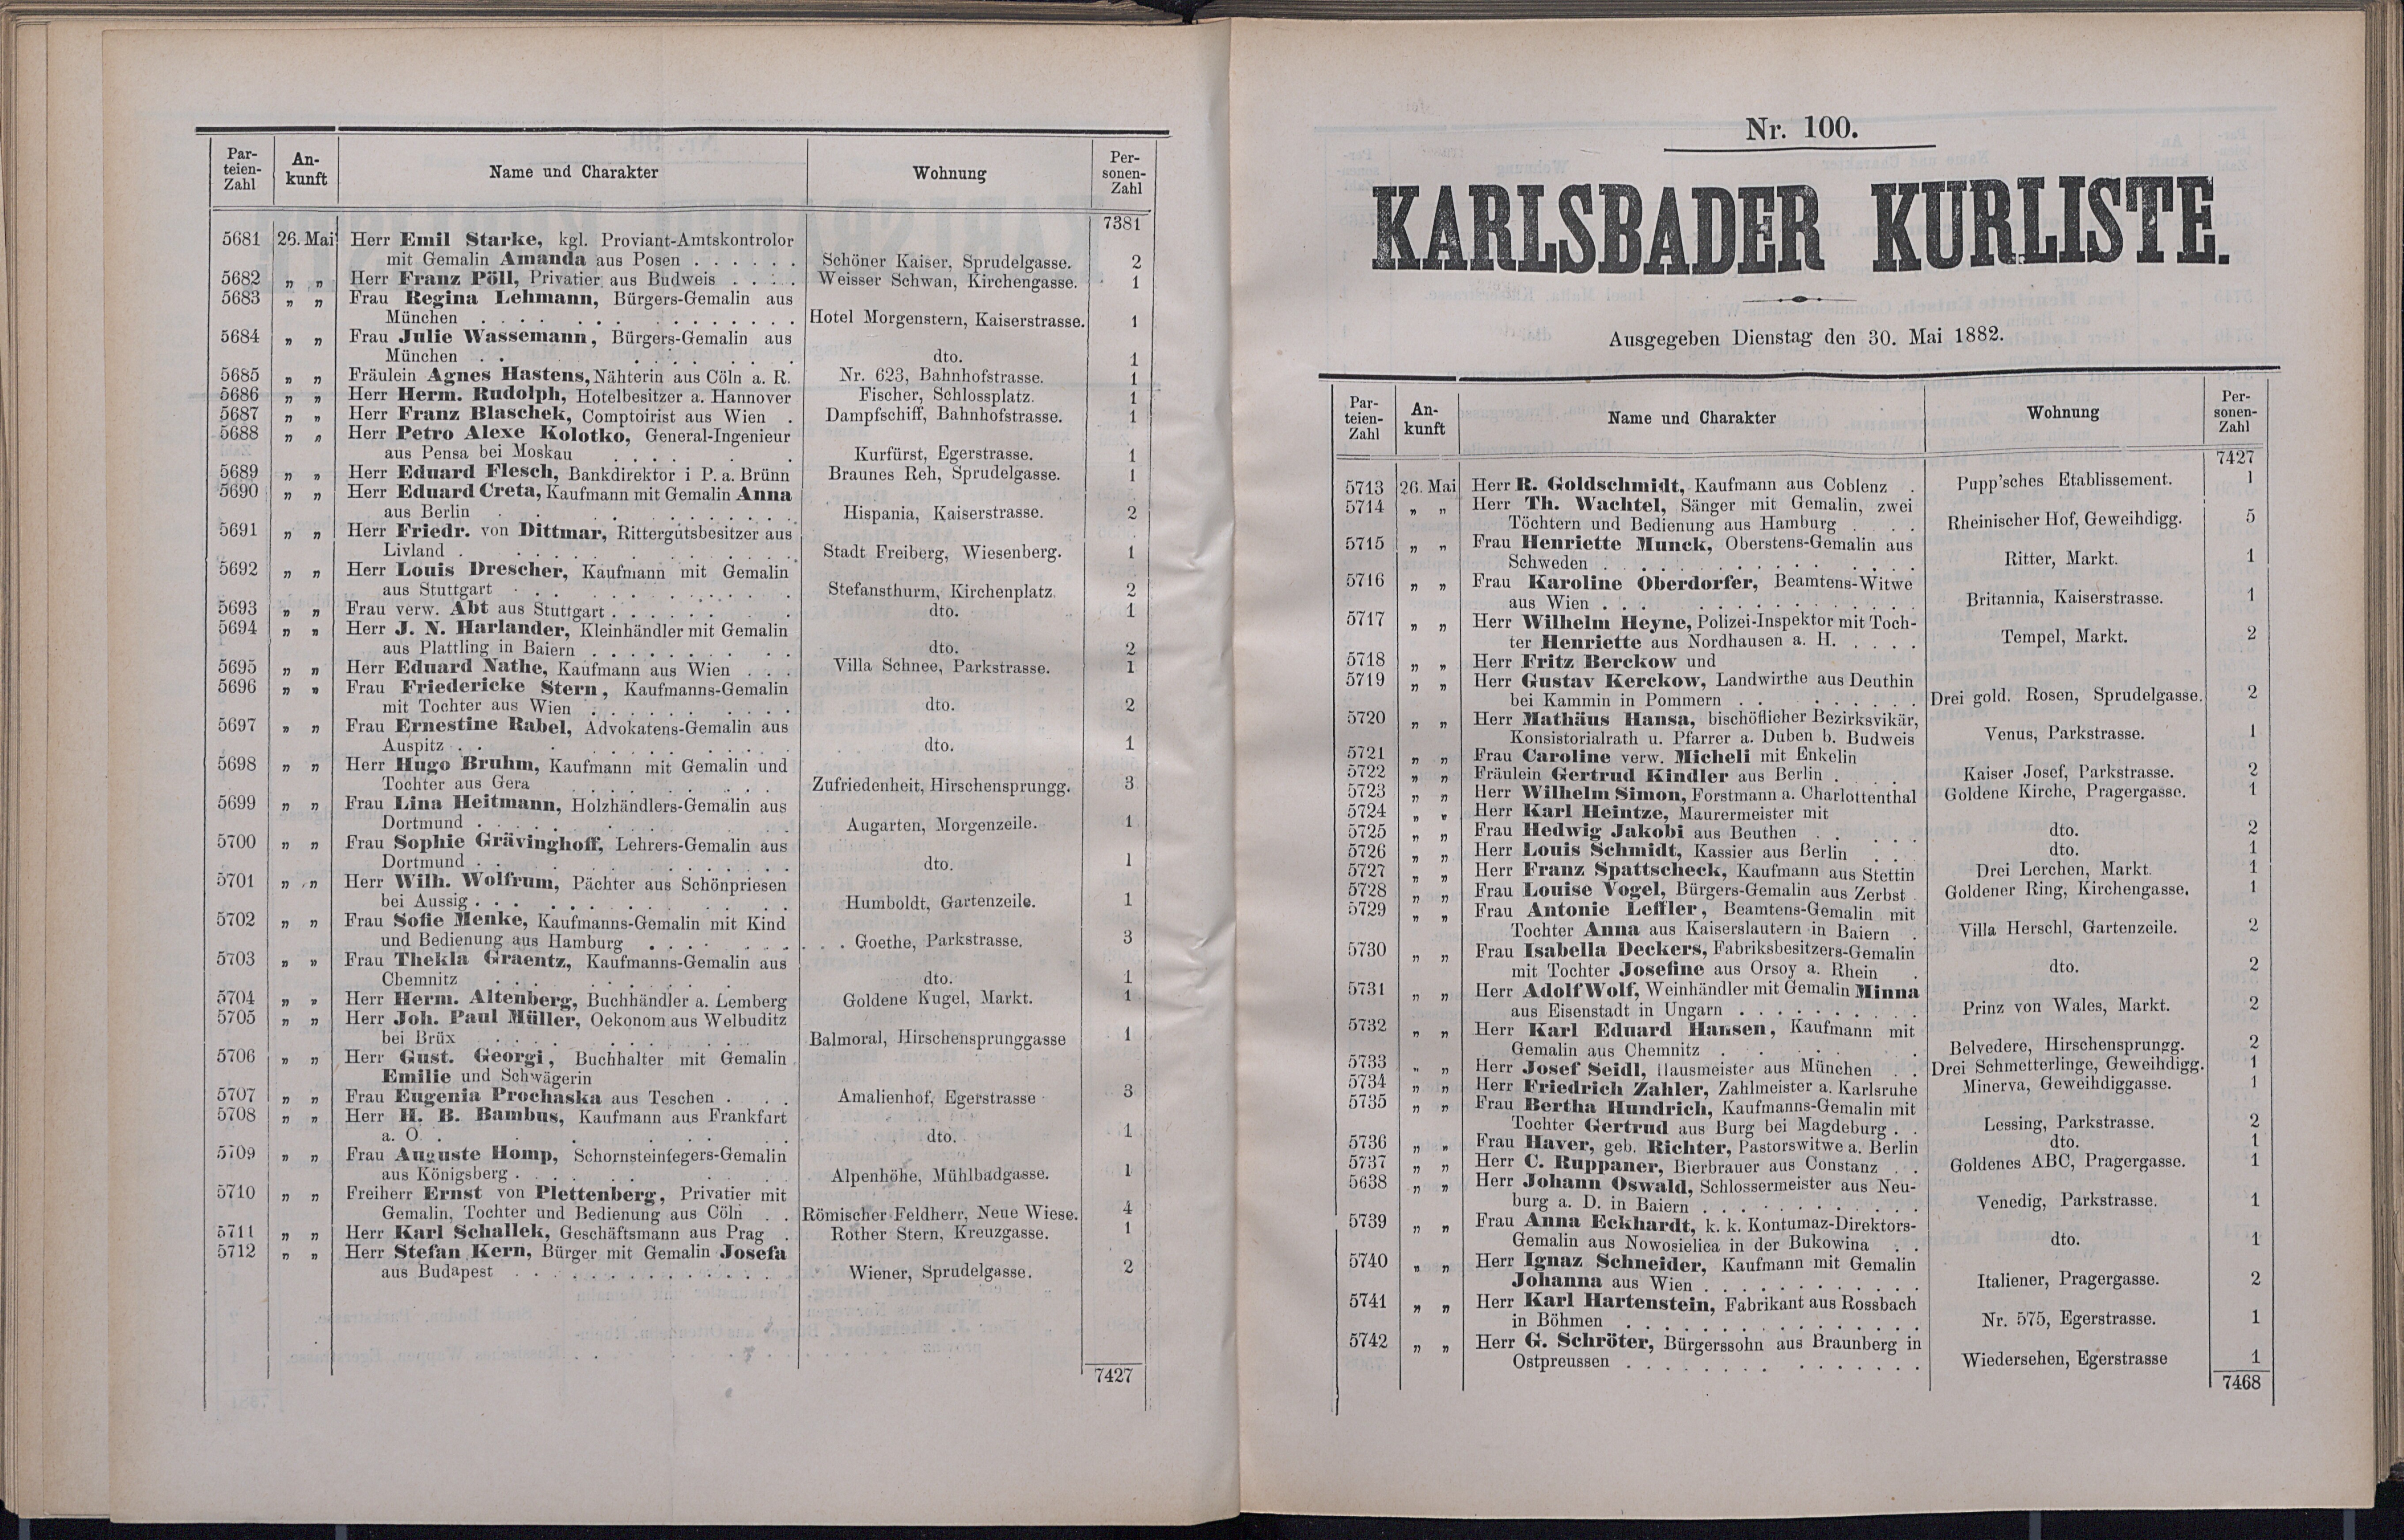 150. soap-kv_knihovna_karlsbader-kurliste-1882_1510